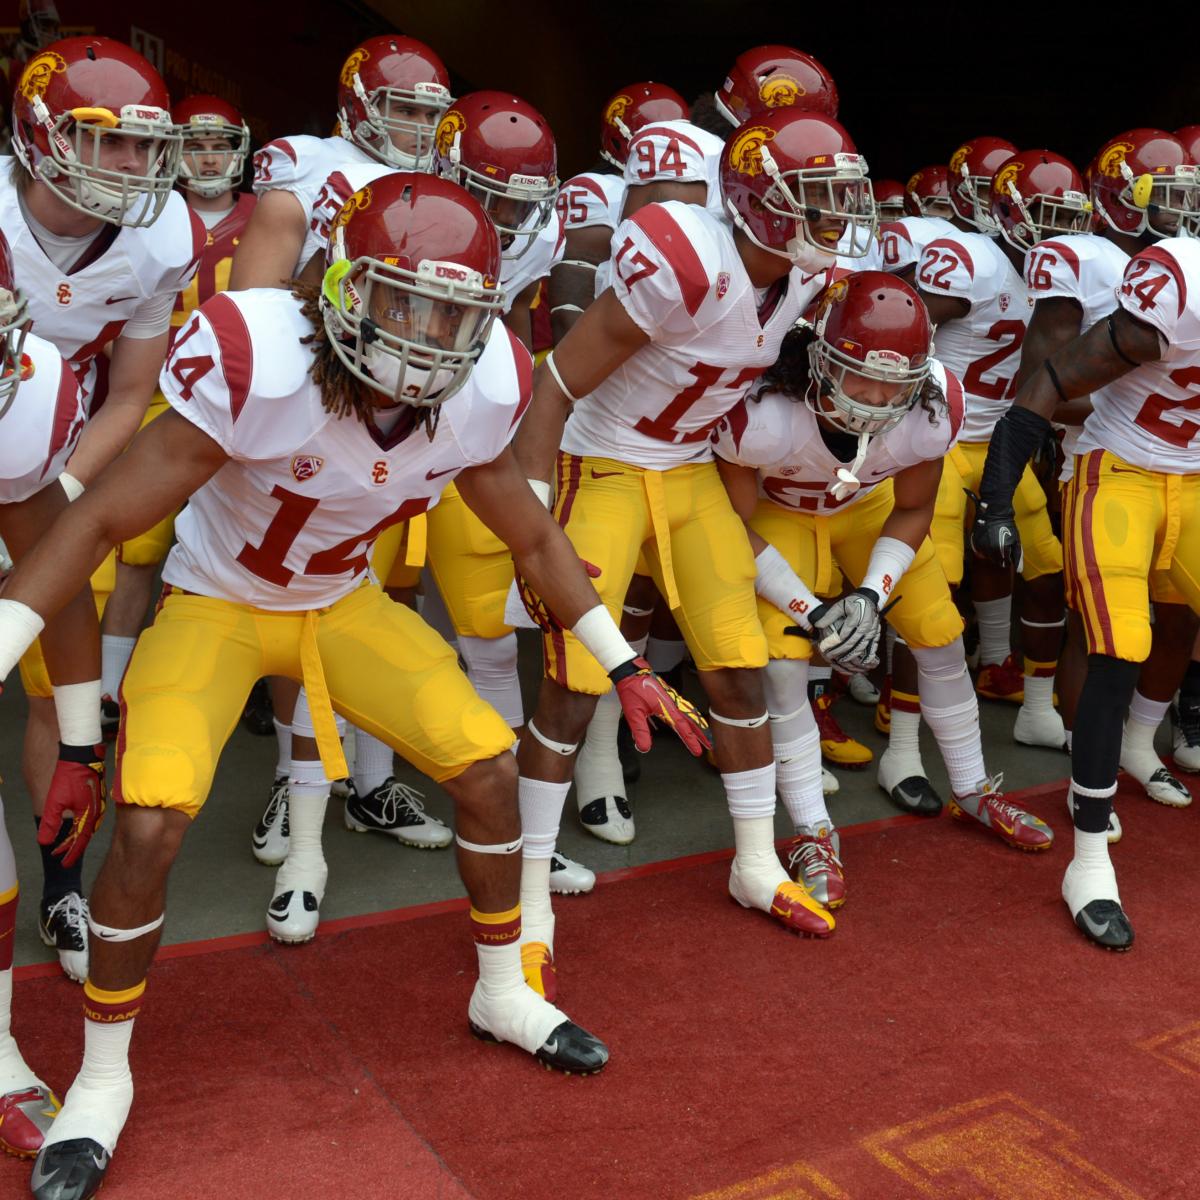 USC Football: Watch 1st Annual Trojans Bowl, Where Walk-Ons Play, Starters Coach | Bleacher